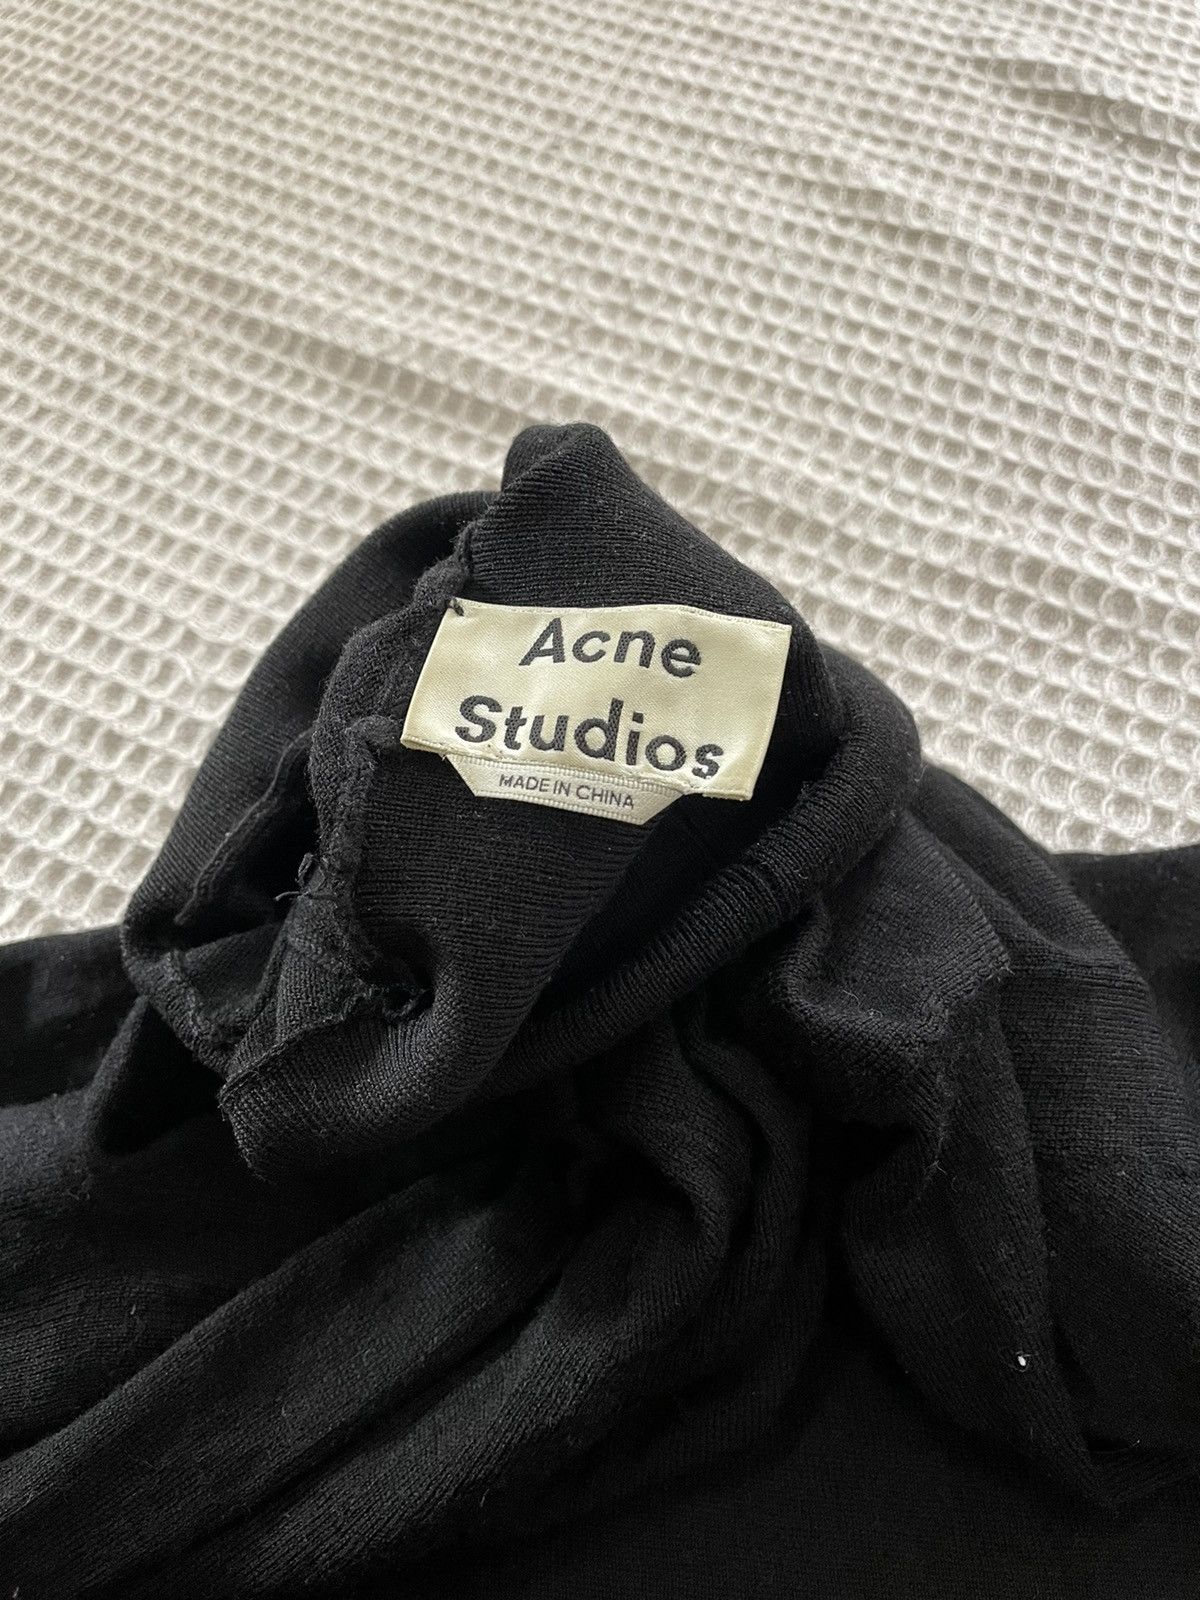 Acne Studios Acne Studios Wool Turtleneck Size US M / EU 48-50 / 2 - 15 Thumbnail